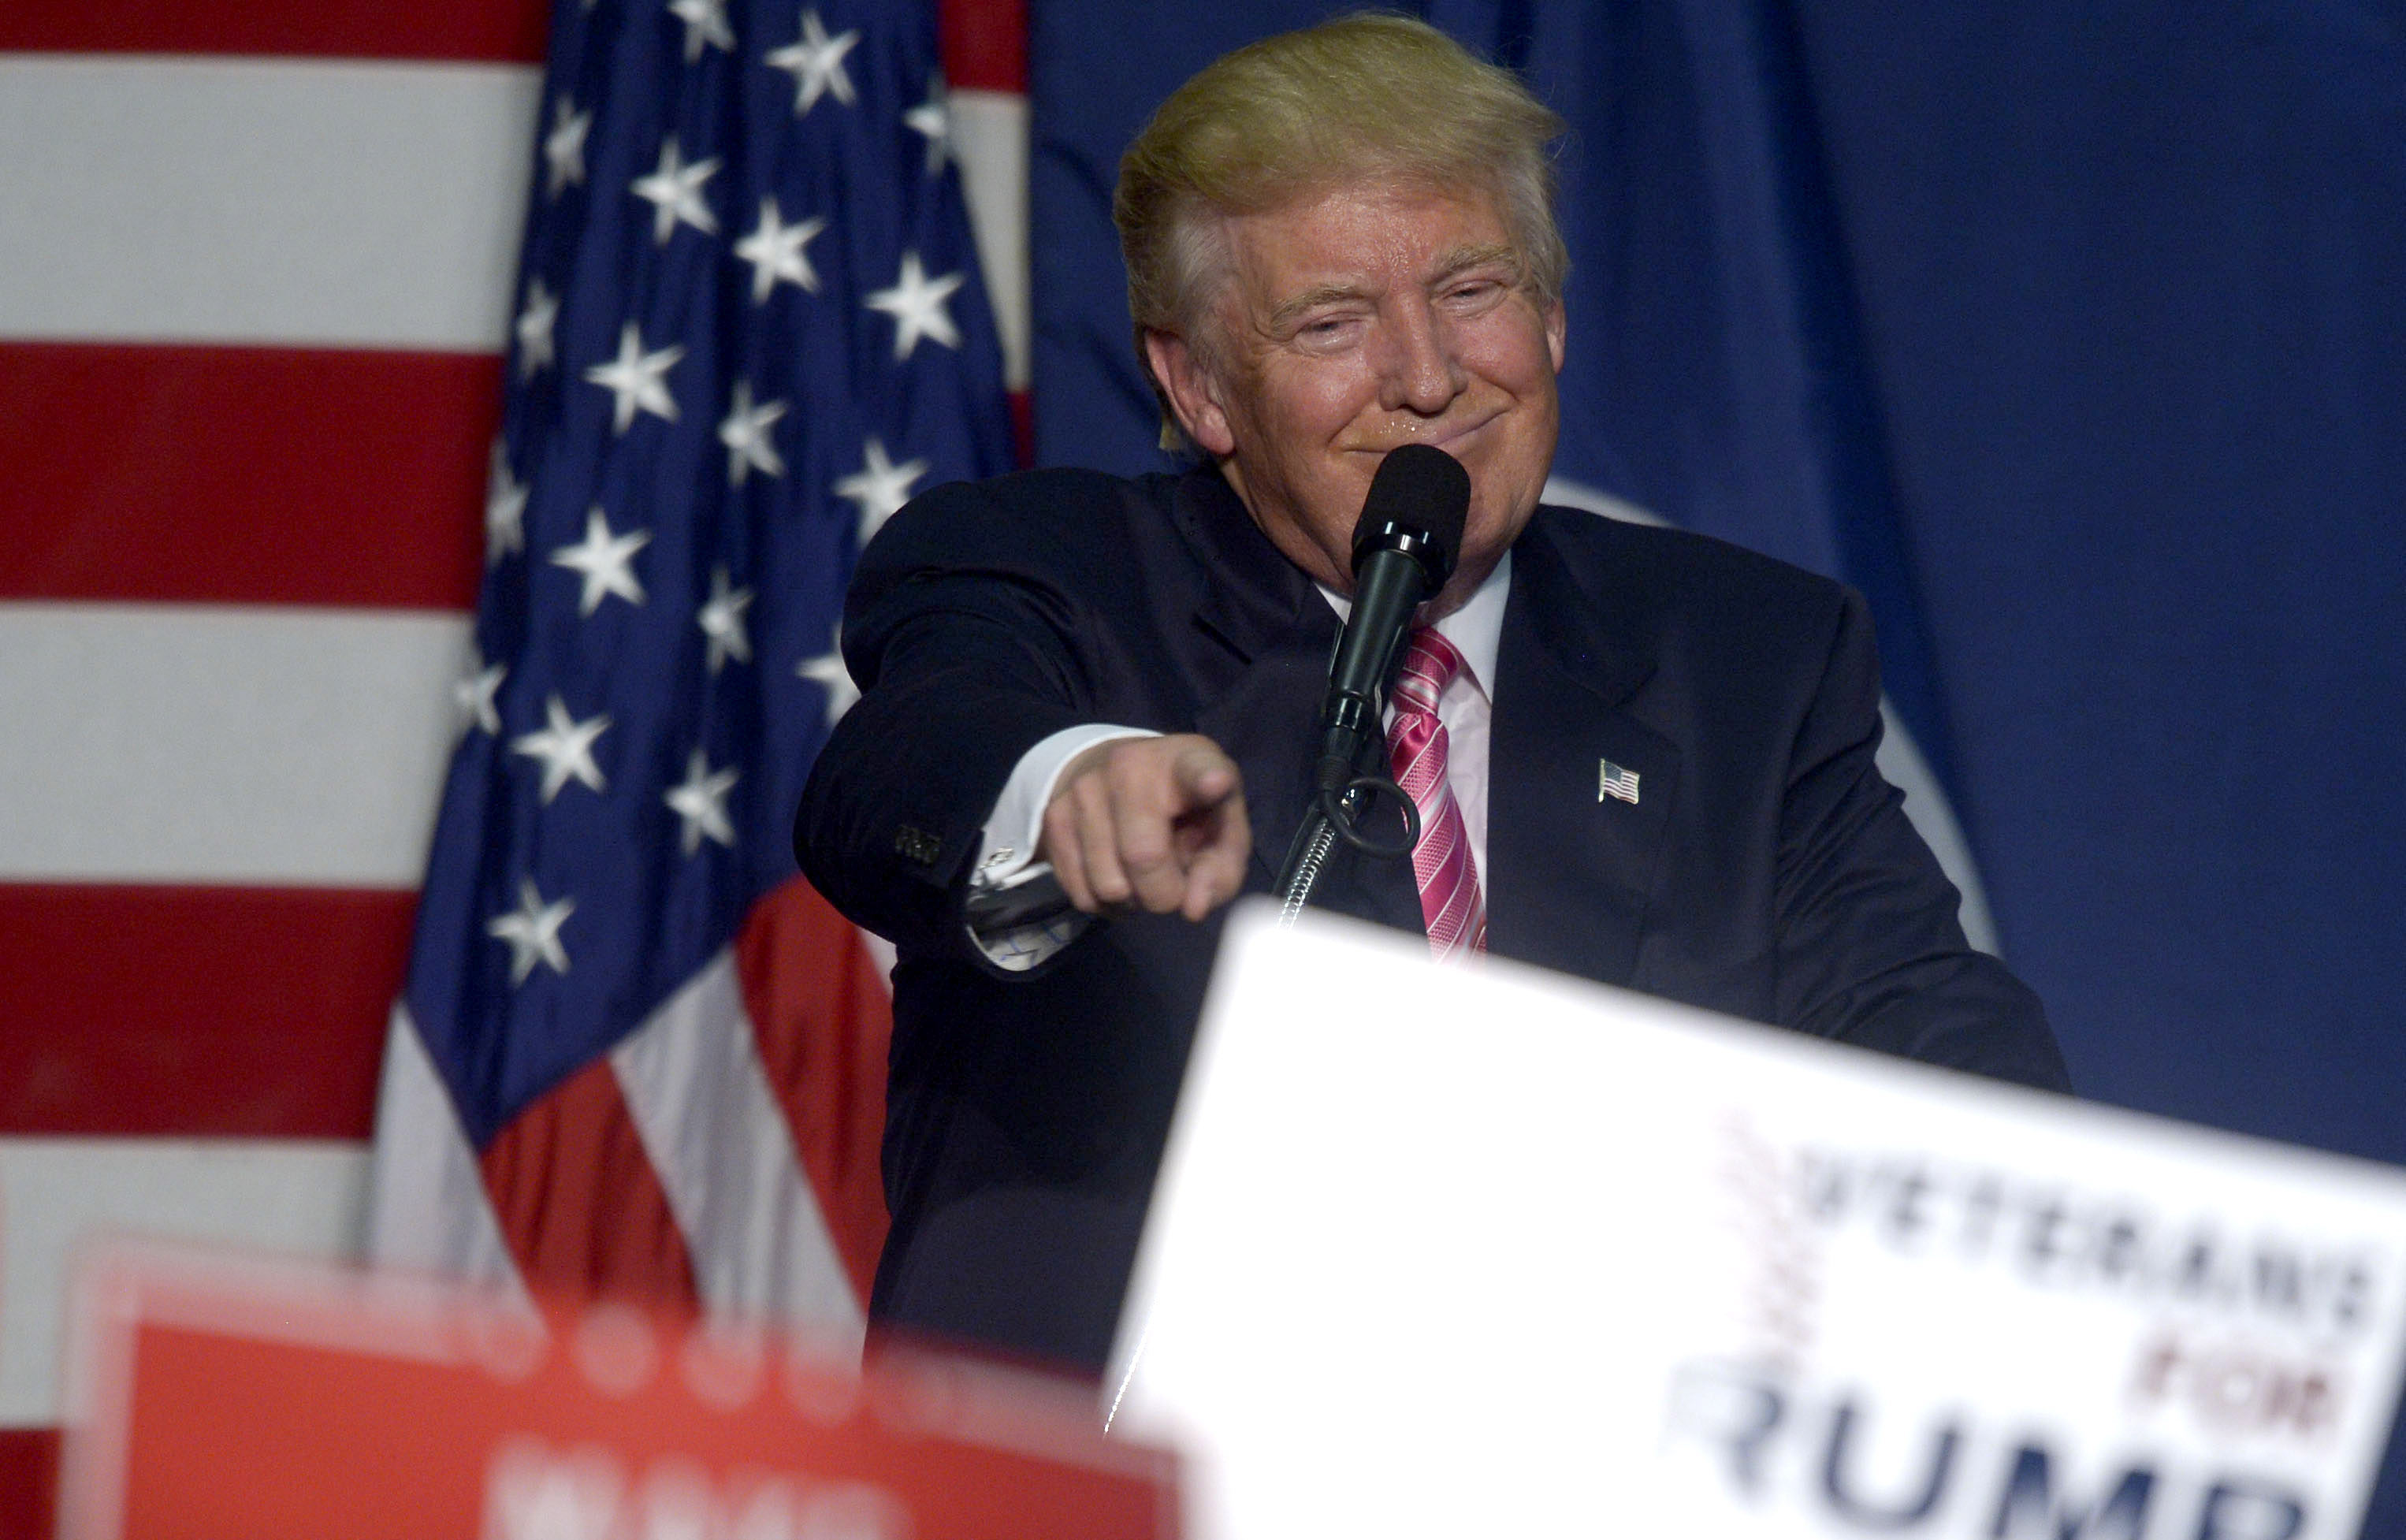 GOP nominee Donald Trump holds a rally in Fredricksburg, VA on Aug. 20, 2016.